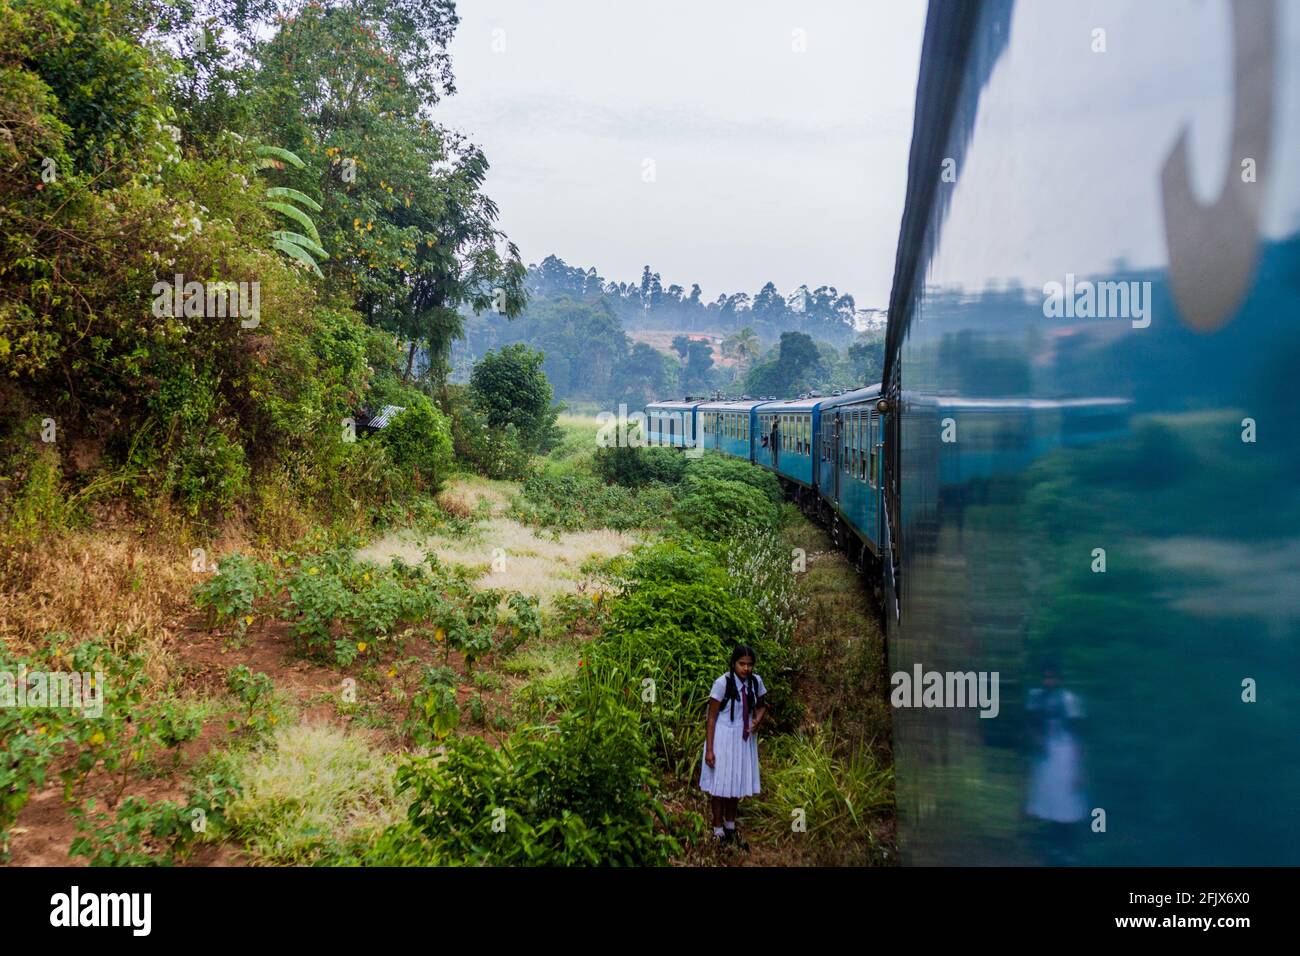 ELLA, SRI LANKA - JULY 15, 2016: Girl in a school uniform walk along railway tracks near Ella, Sri Lanka Stock Photo